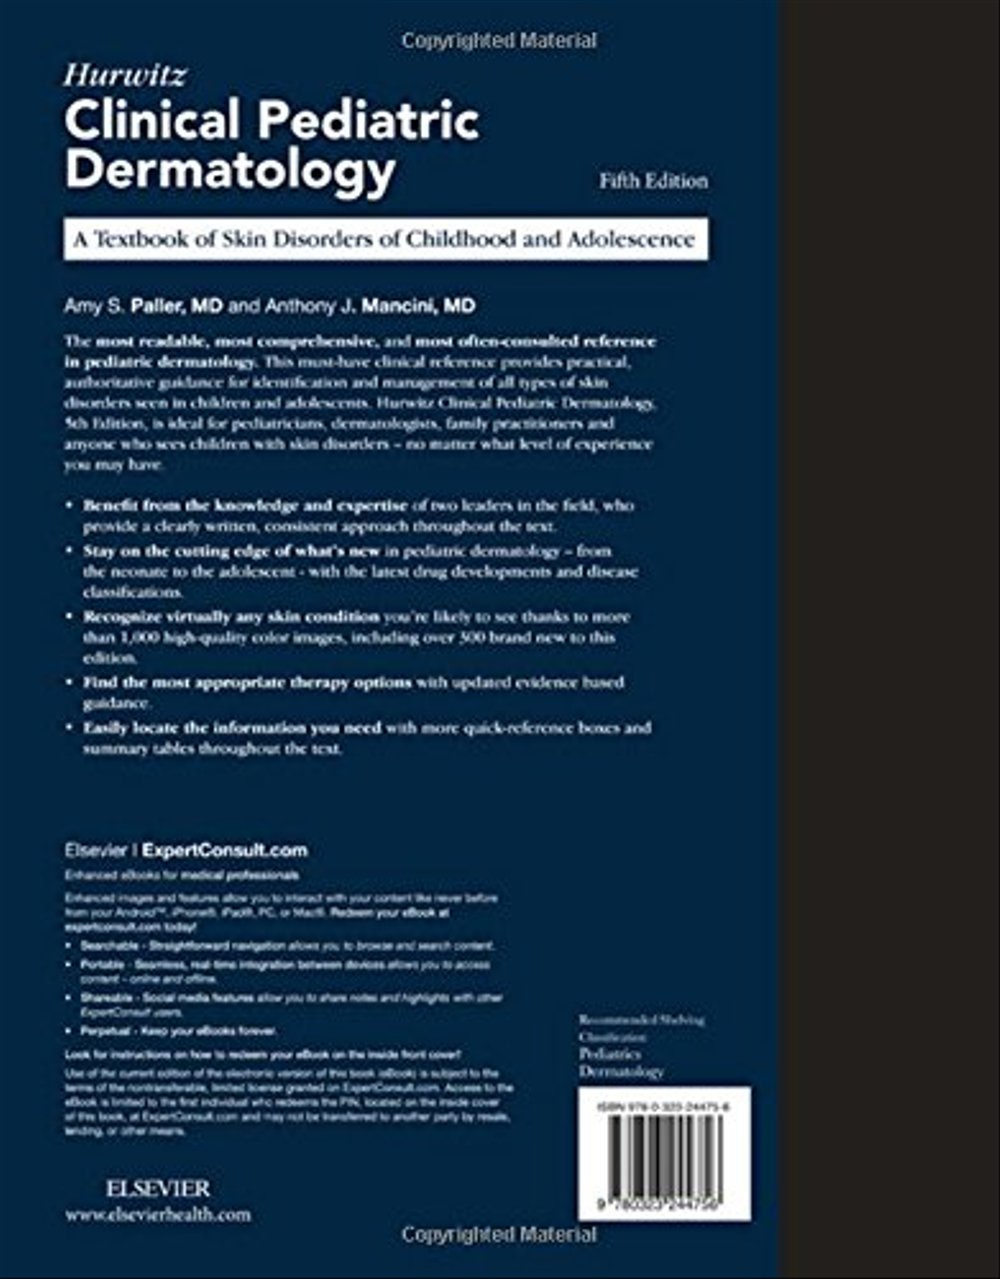 hurwitz clinical pediatric dermatology 5th edition pdf